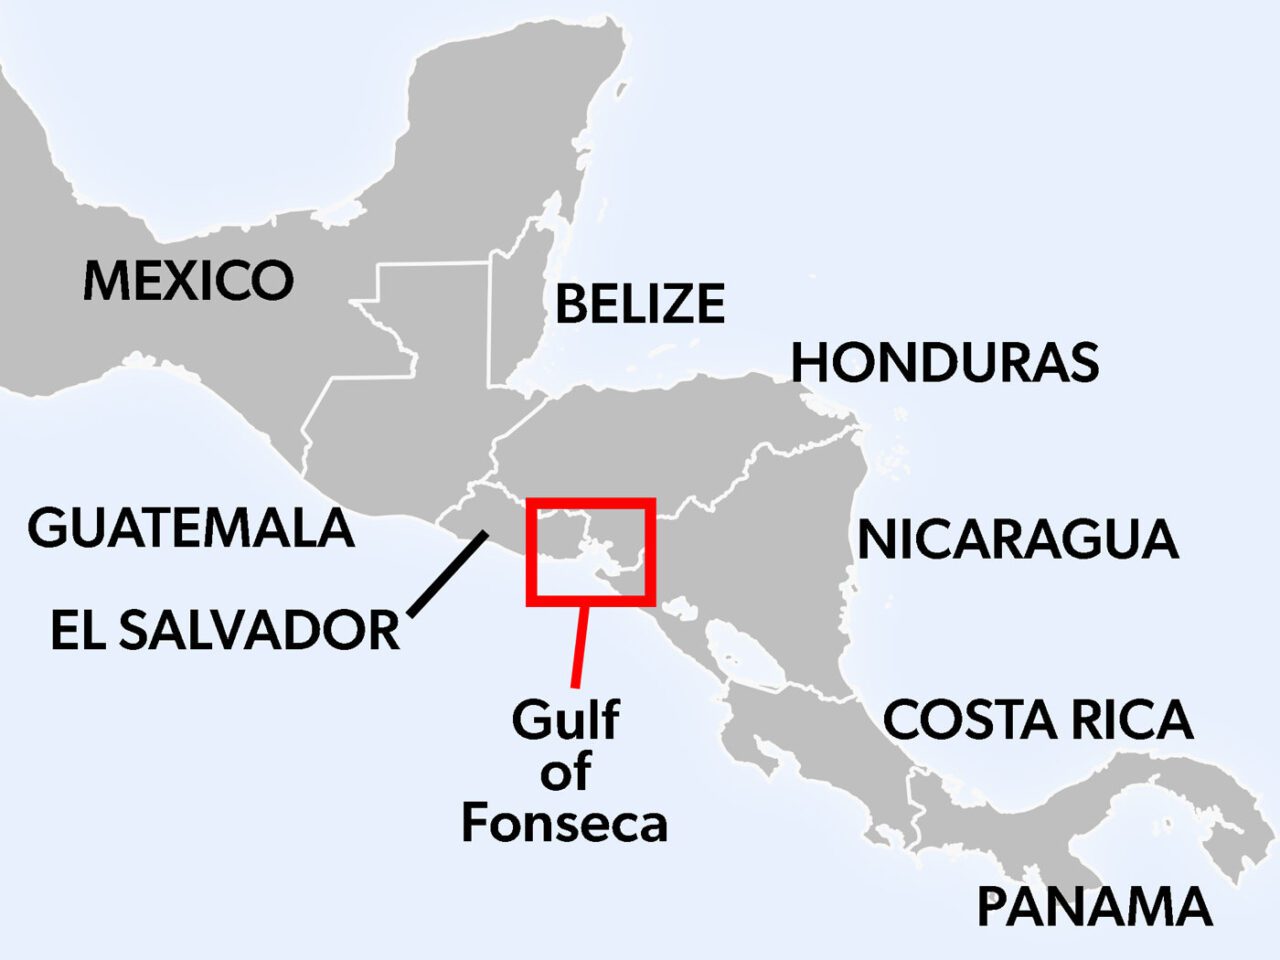 Map of Central America (Mexico, Guatemala, El Salvador, Belize, Honduras, Nicaragua, Costa Rica, Panama) with a square around the Gulf of Fonseca, Honduras.